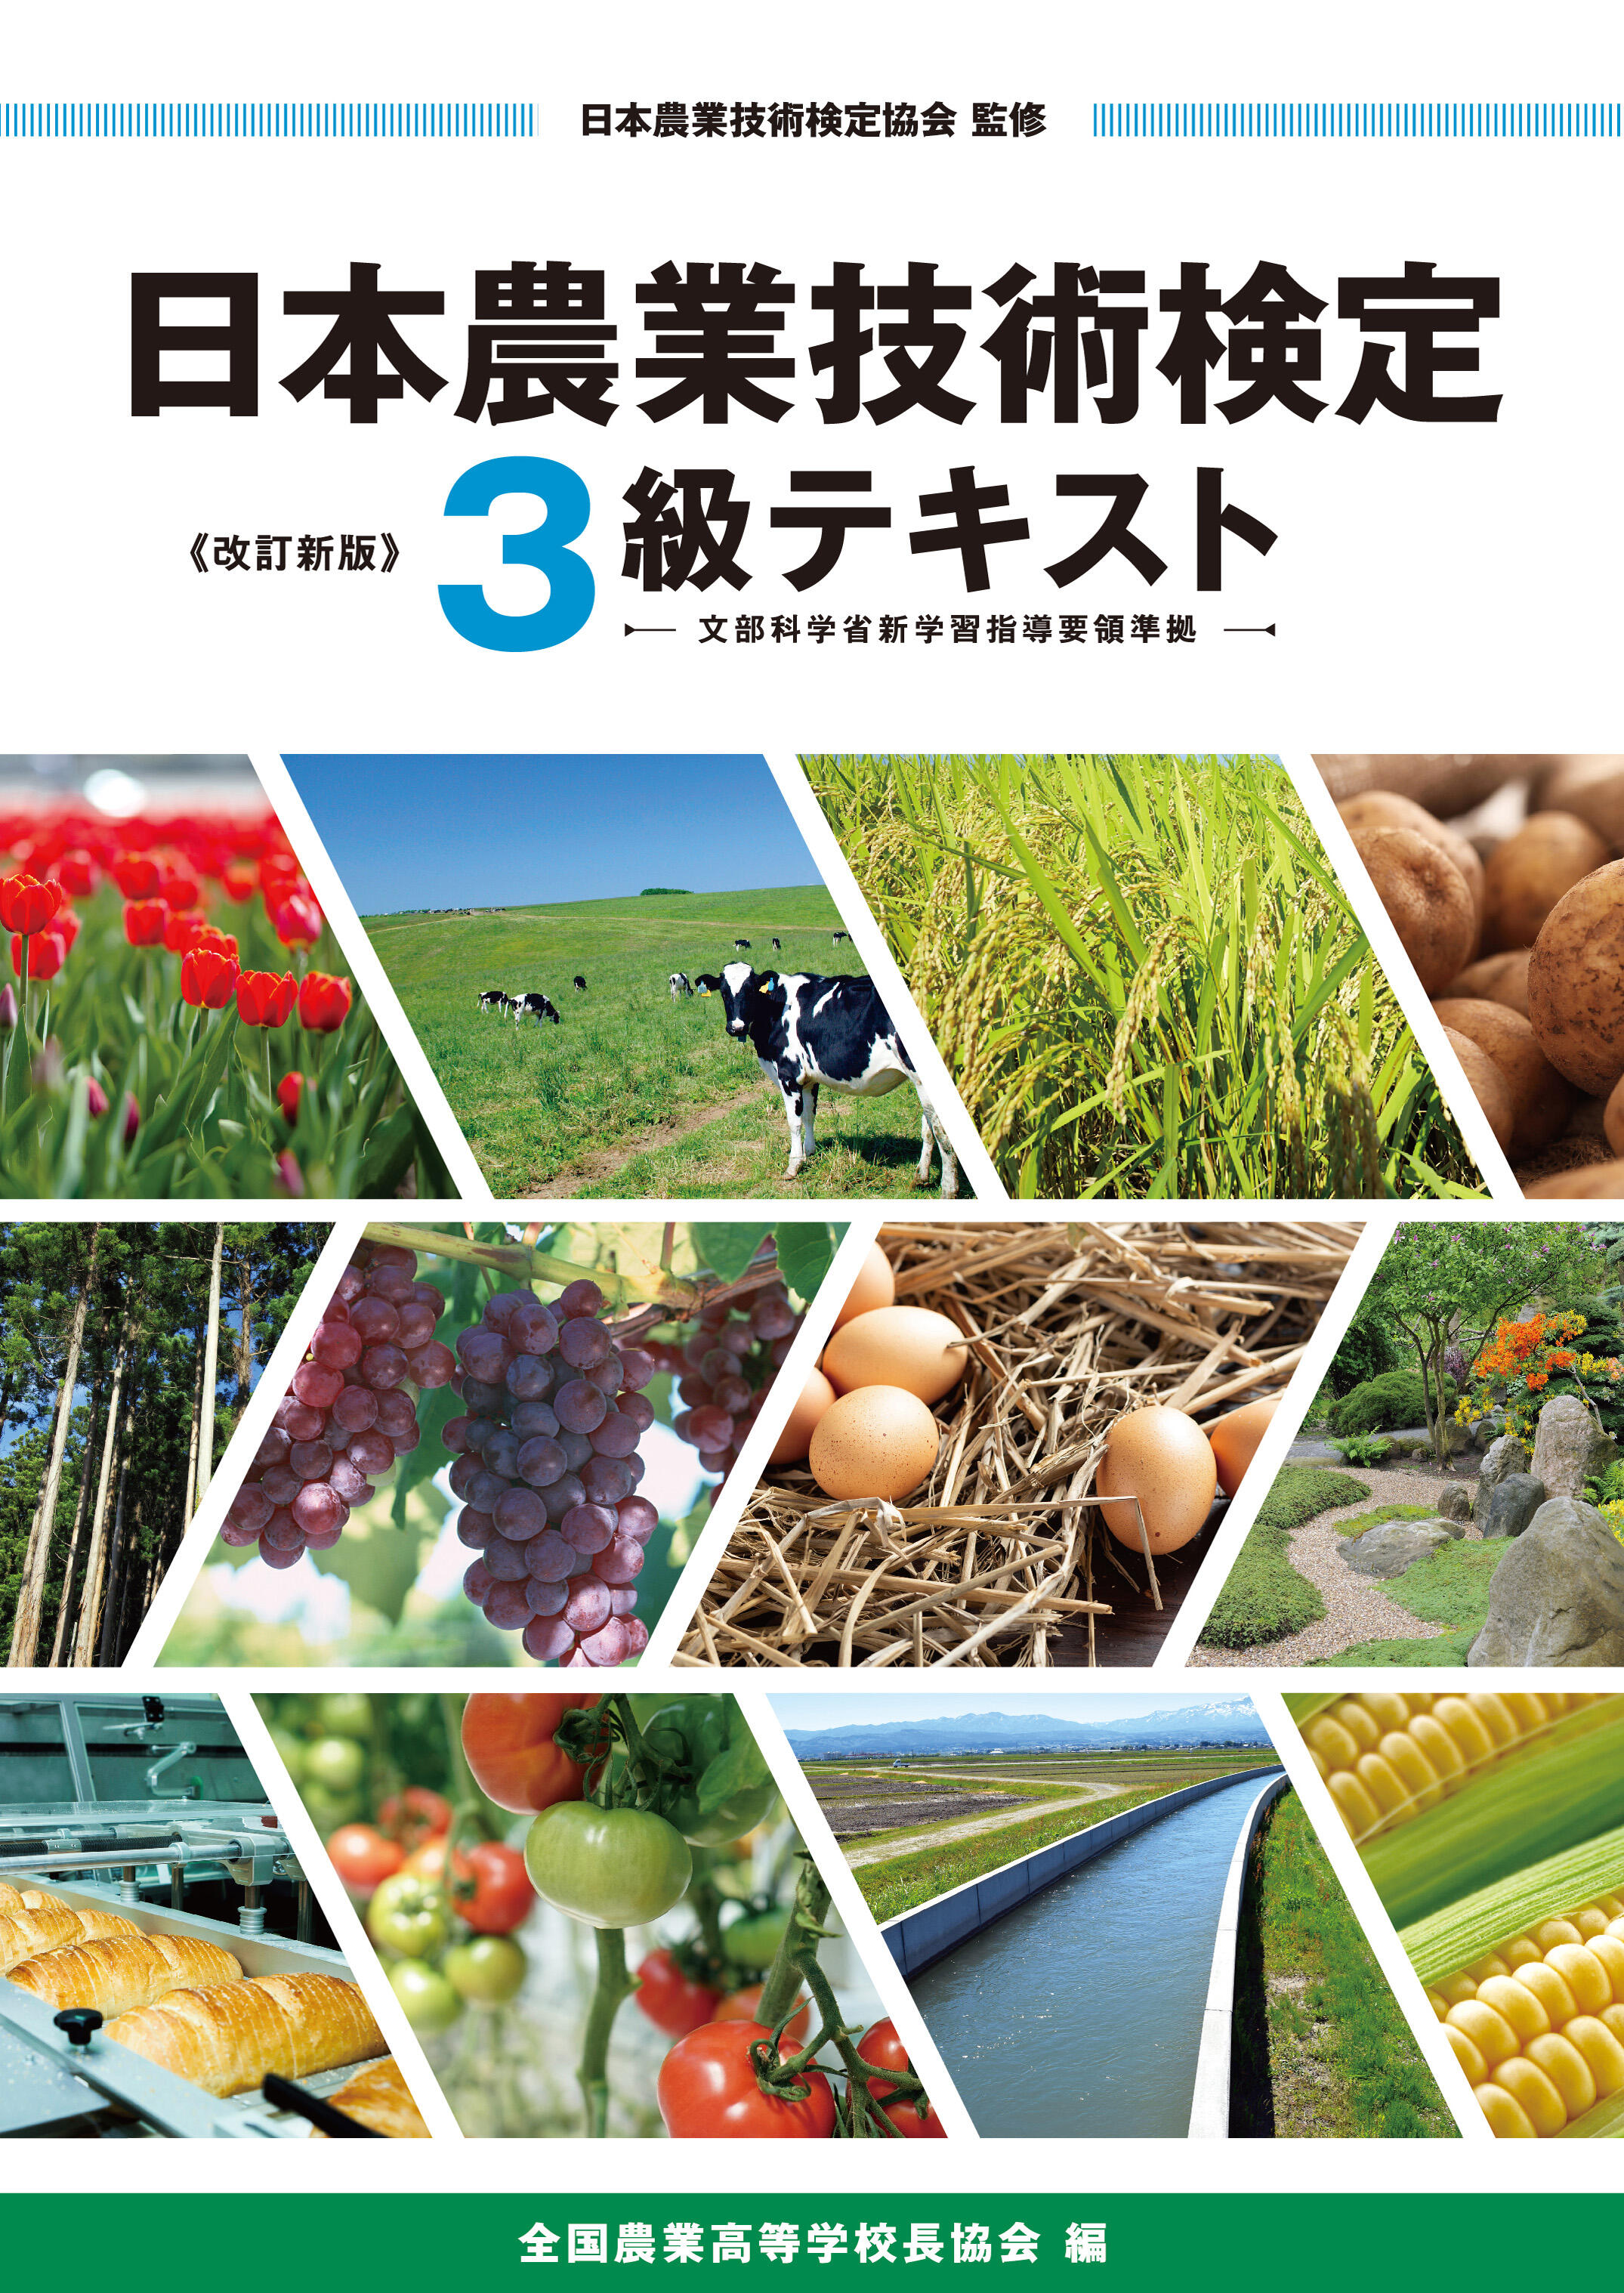 R02-18 日本農業技術検定３級テキスト.jpg